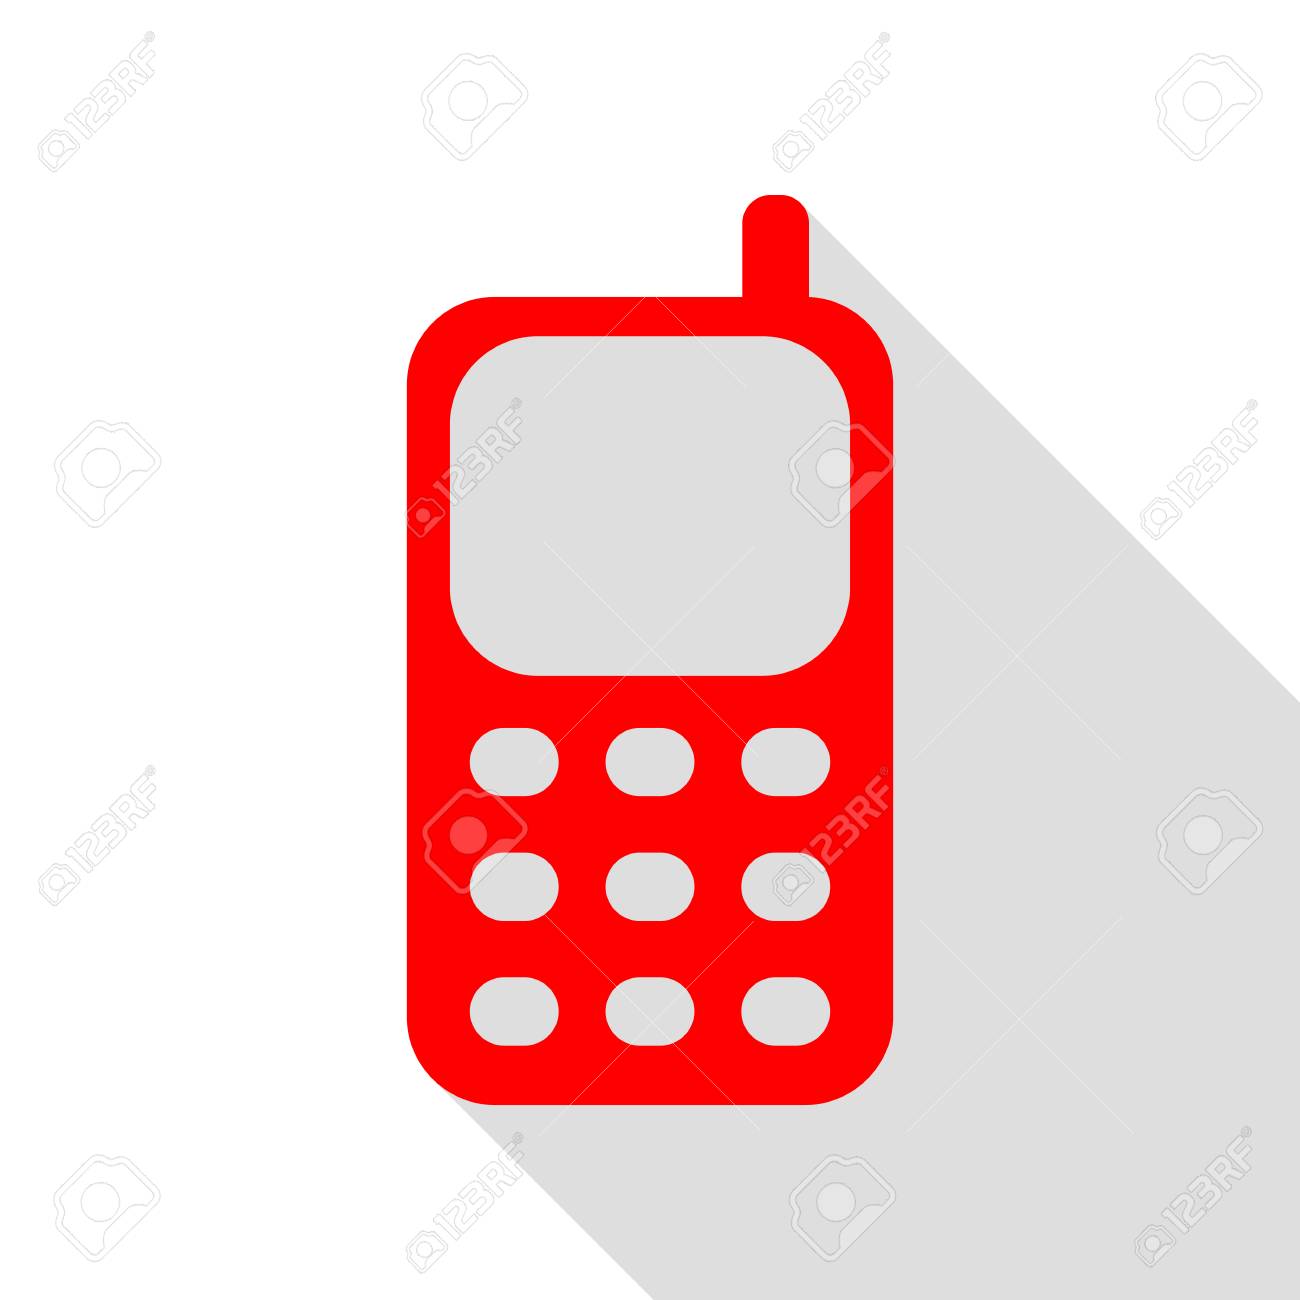 Virgin Mobile | 0843 515 8680 - Call the Helpline Today